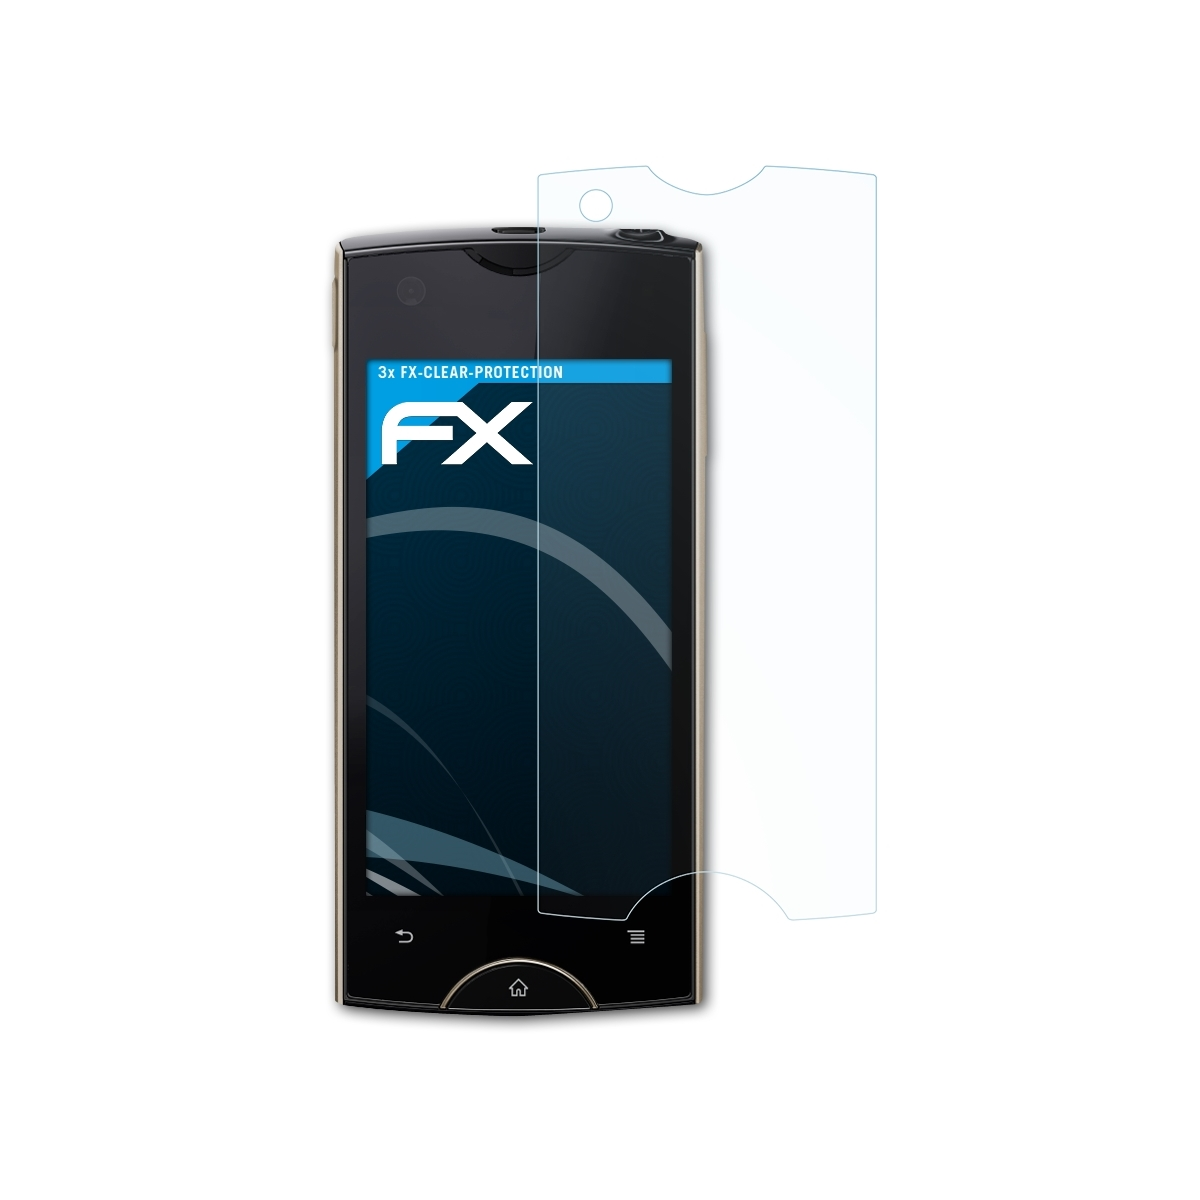 ATFOLIX 3x Sony-Ericsson FX-Clear ray) Xperia Displayschutz(für